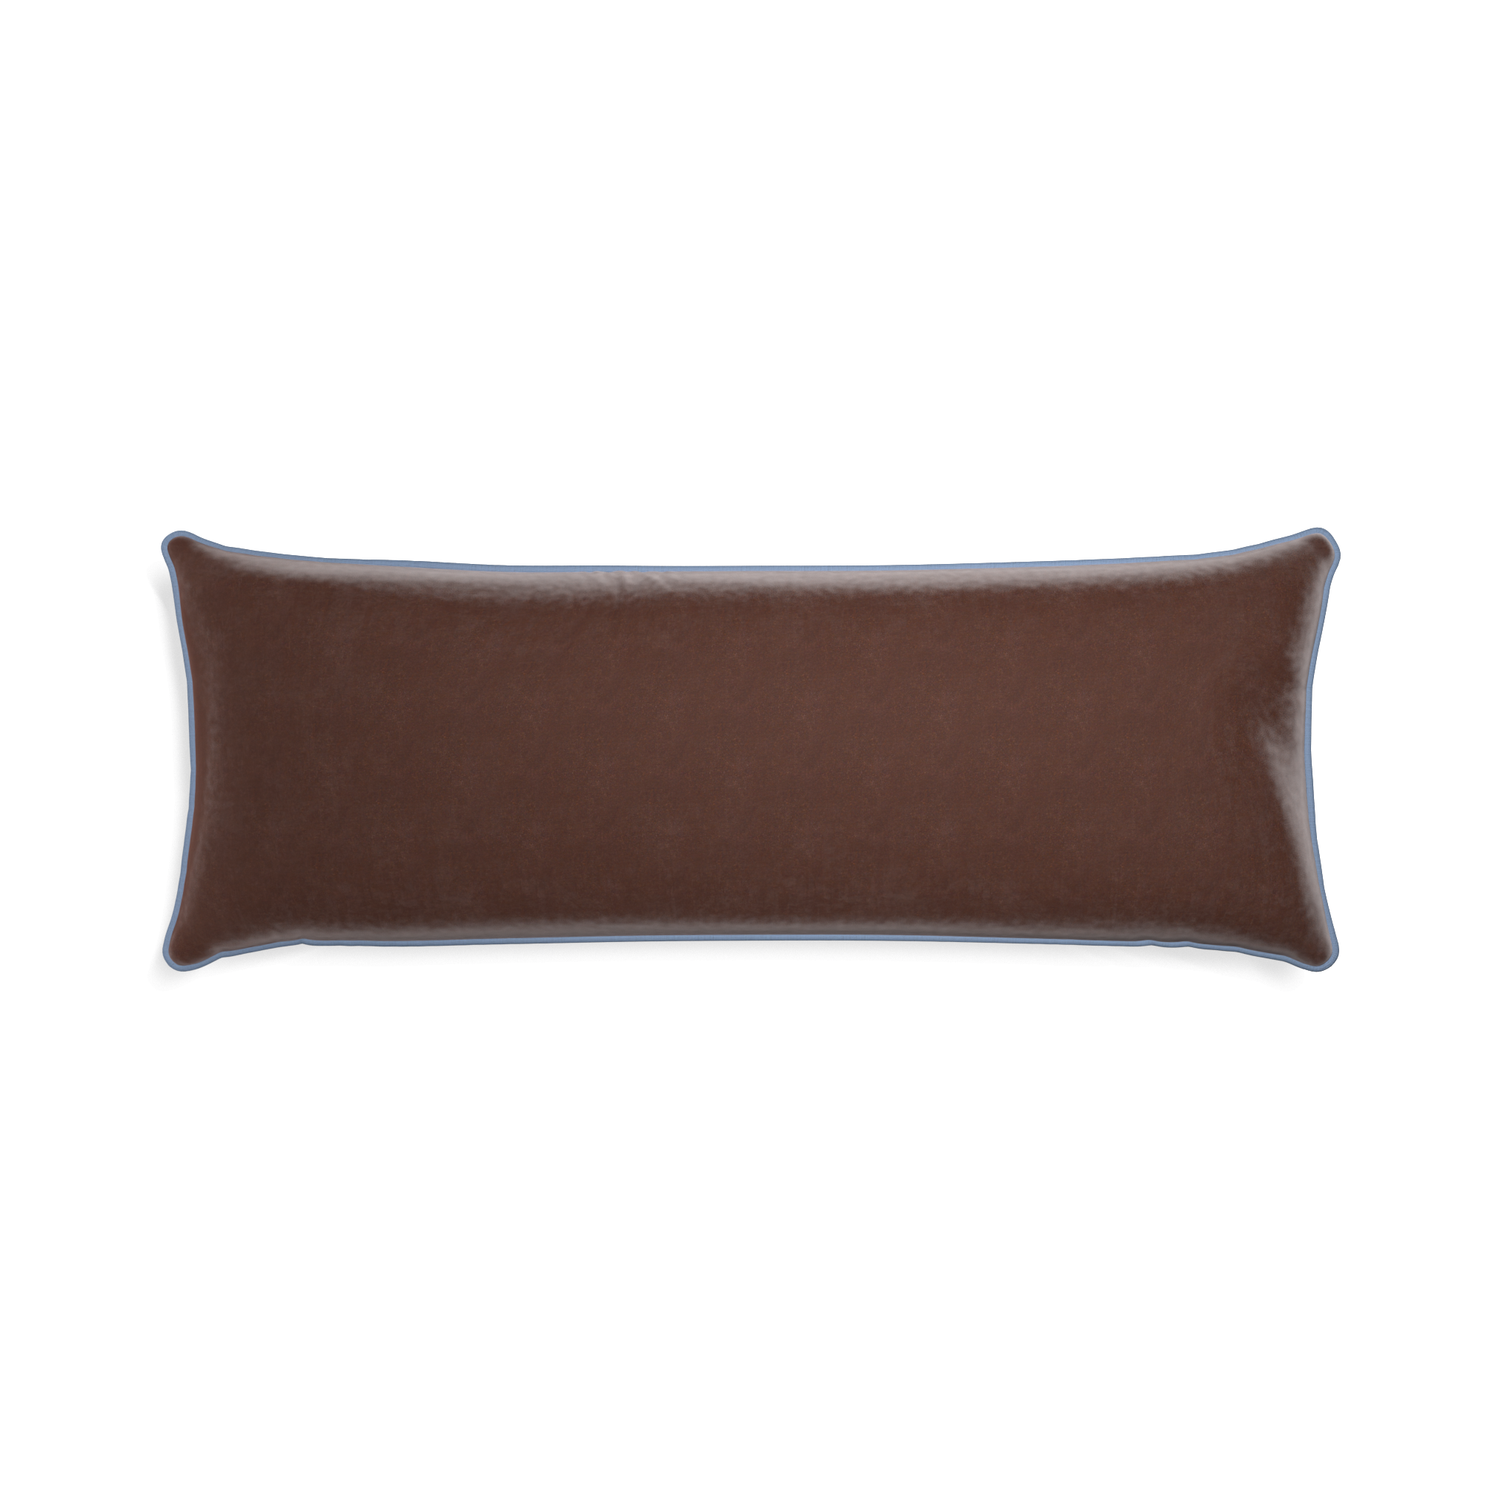 Xl-lumbar walnut velvet custom pillow with sky piping on white background